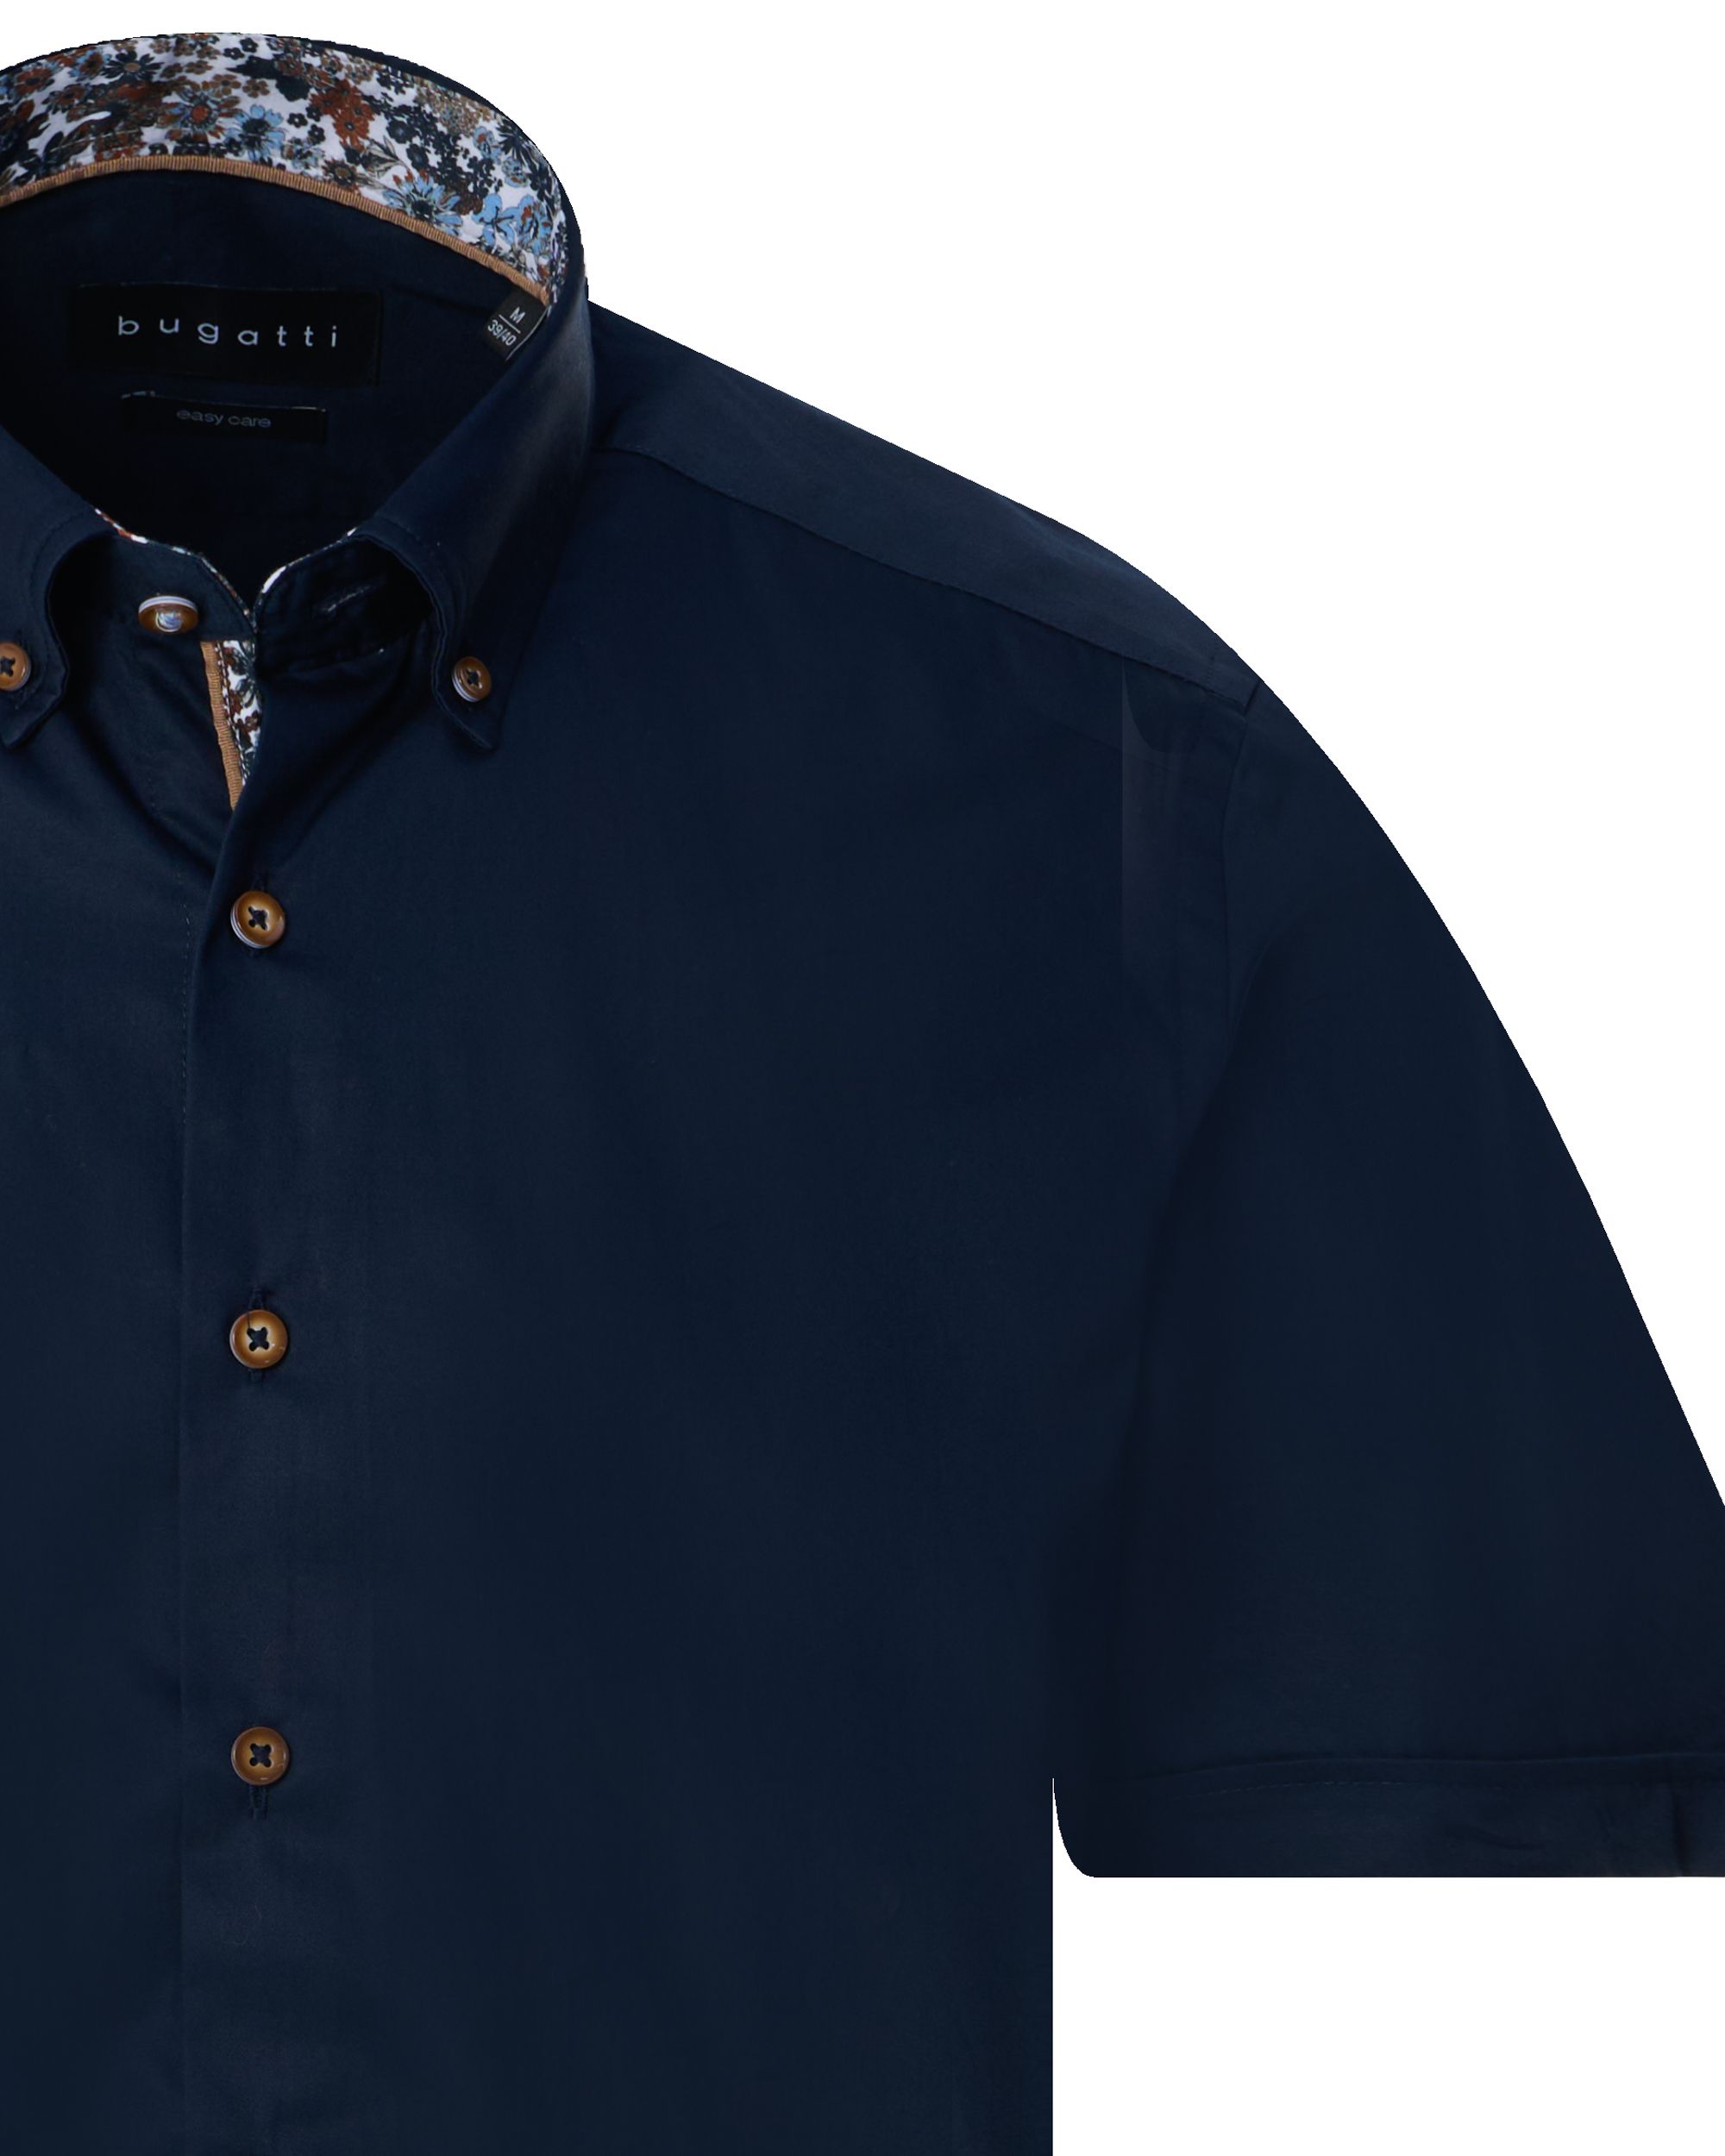 Bugatti clothing Casual Overhemd KM Donker blauw 094508-001-L